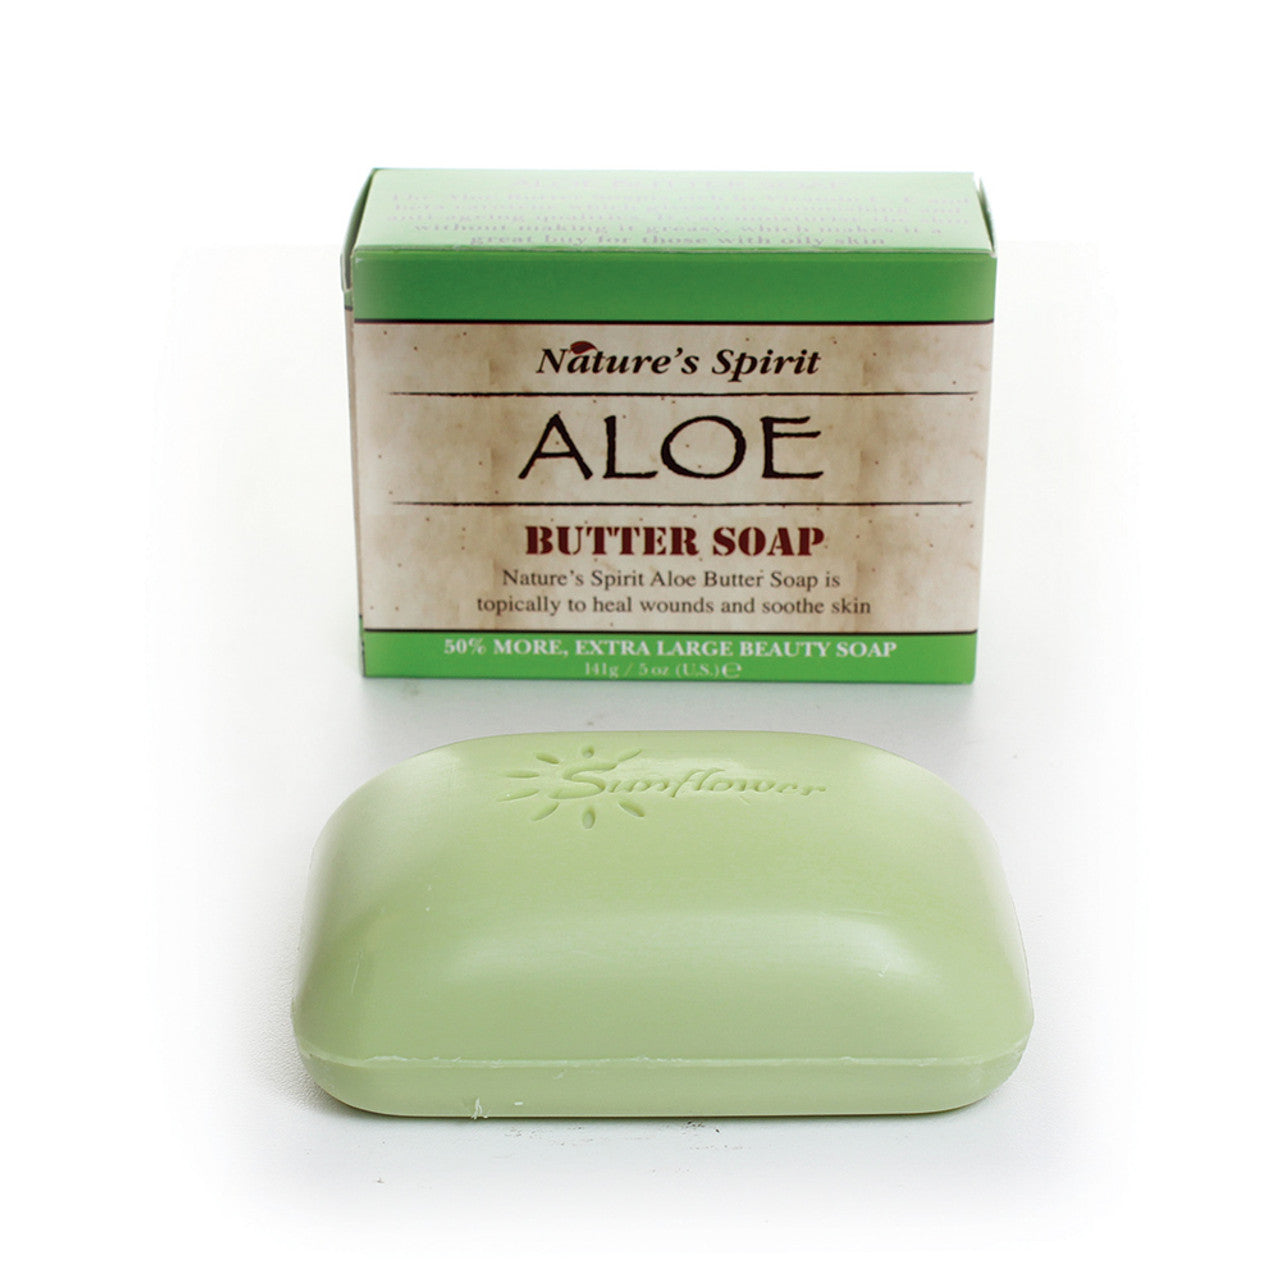 Aloe Butter Nature's Spirit Soap 5 oz.